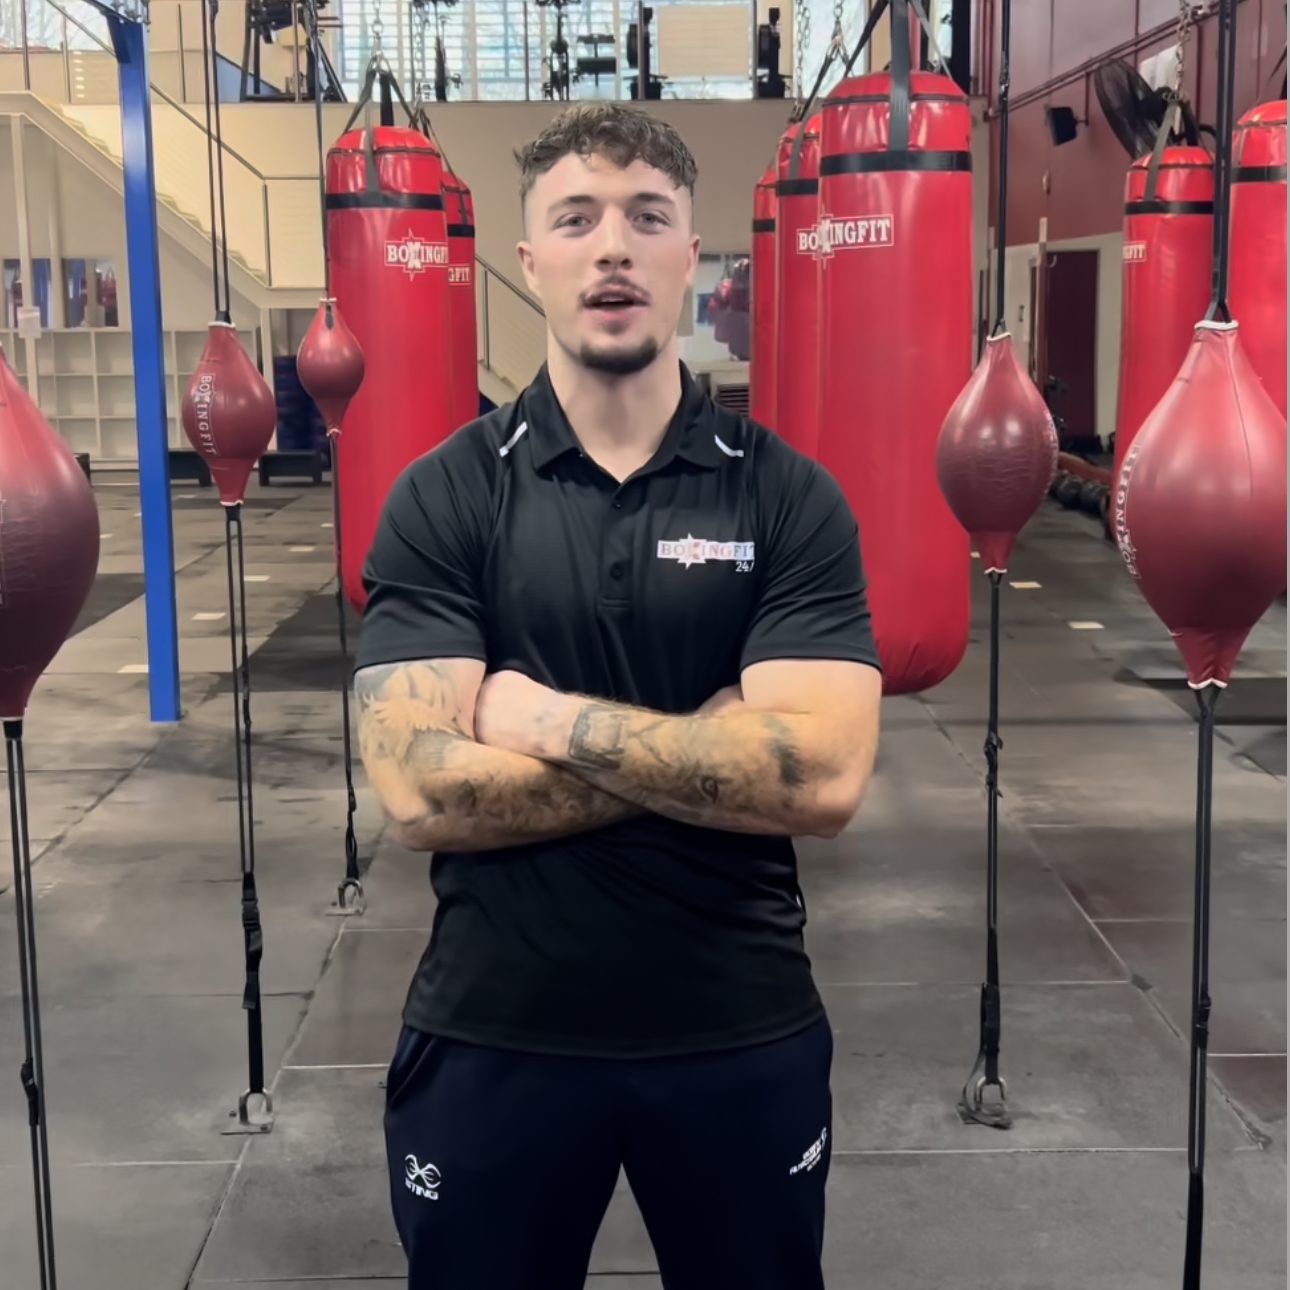 BoxingFit Trainer Liam